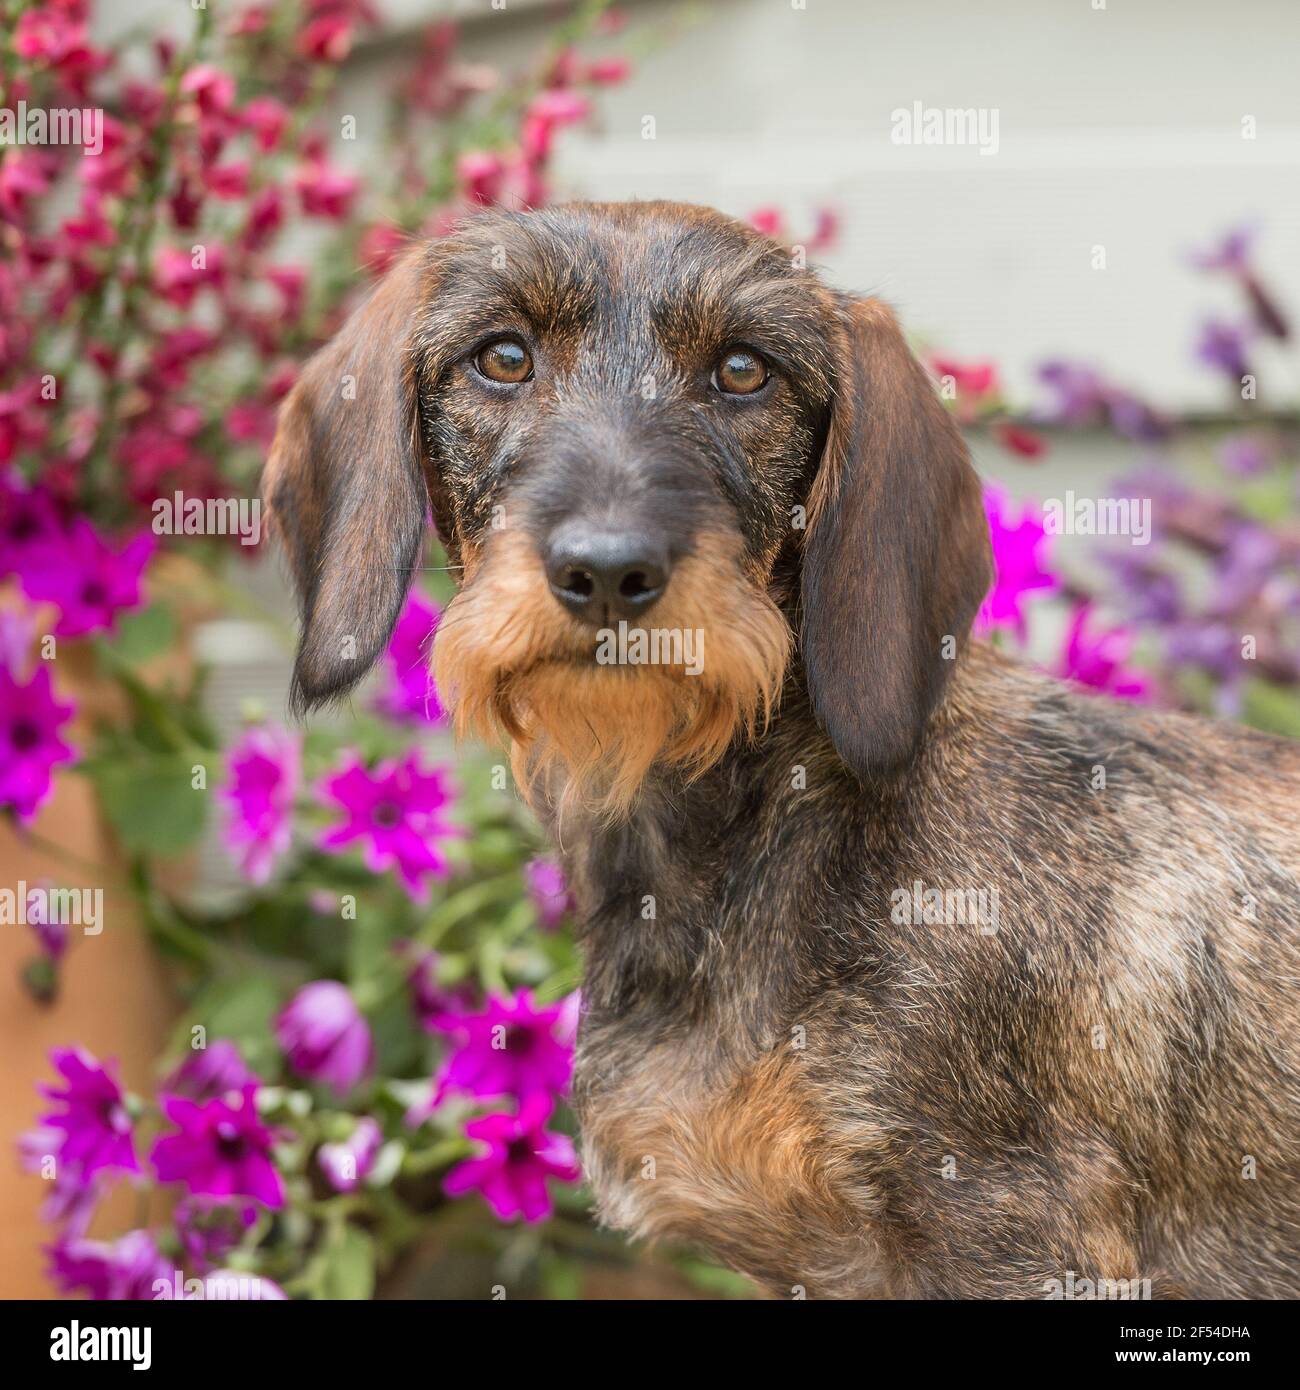 Wirehaired Dachshund dog Stock Photo